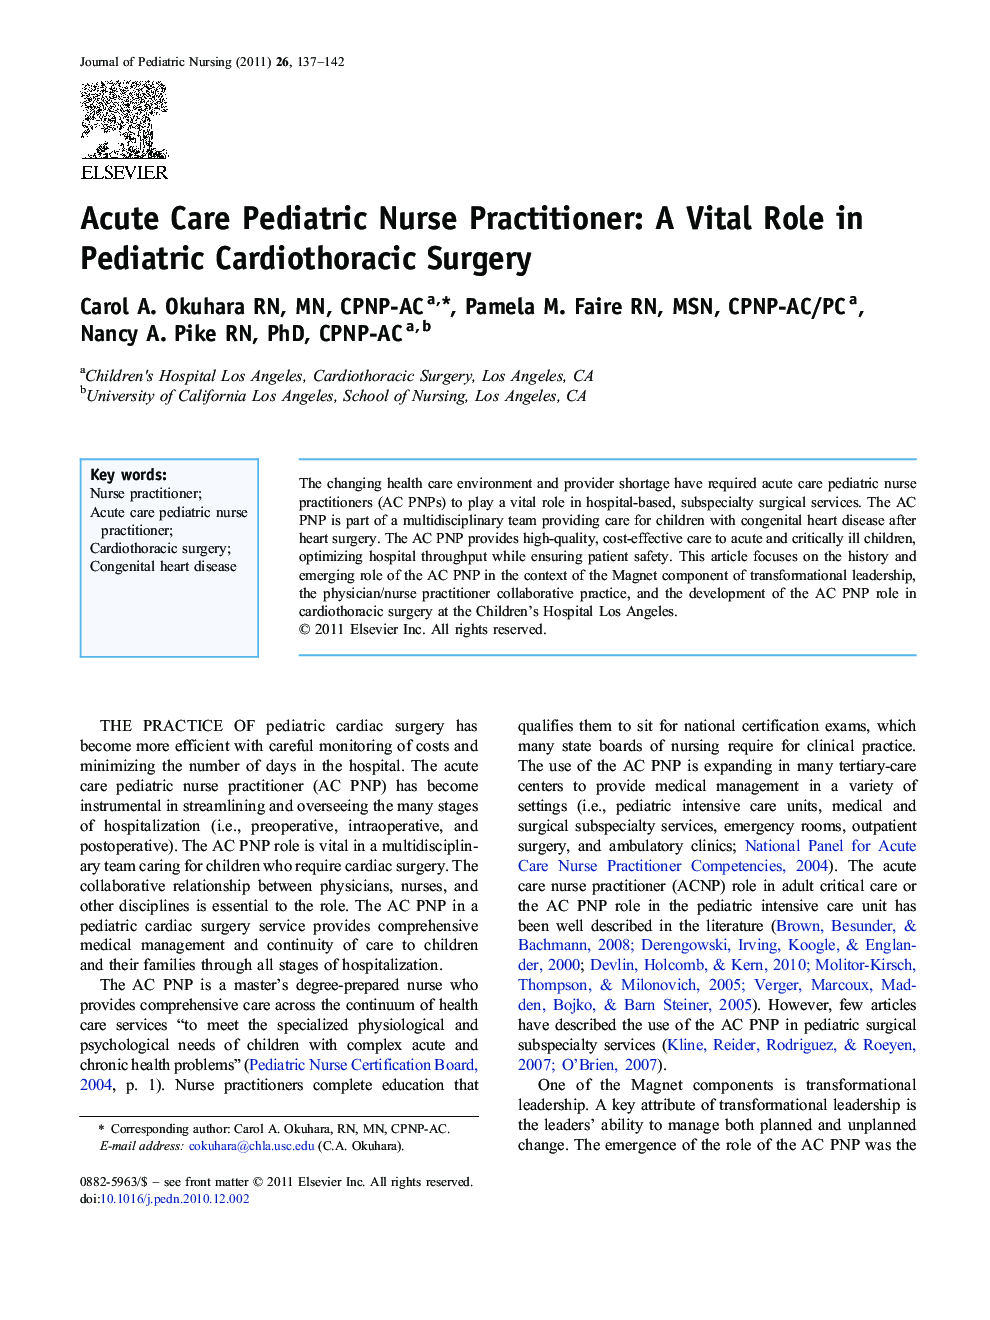 Acute Care Pediatric Nurse Practitioner: A Vital Role in Pediatric Cardiothoracic Surgery